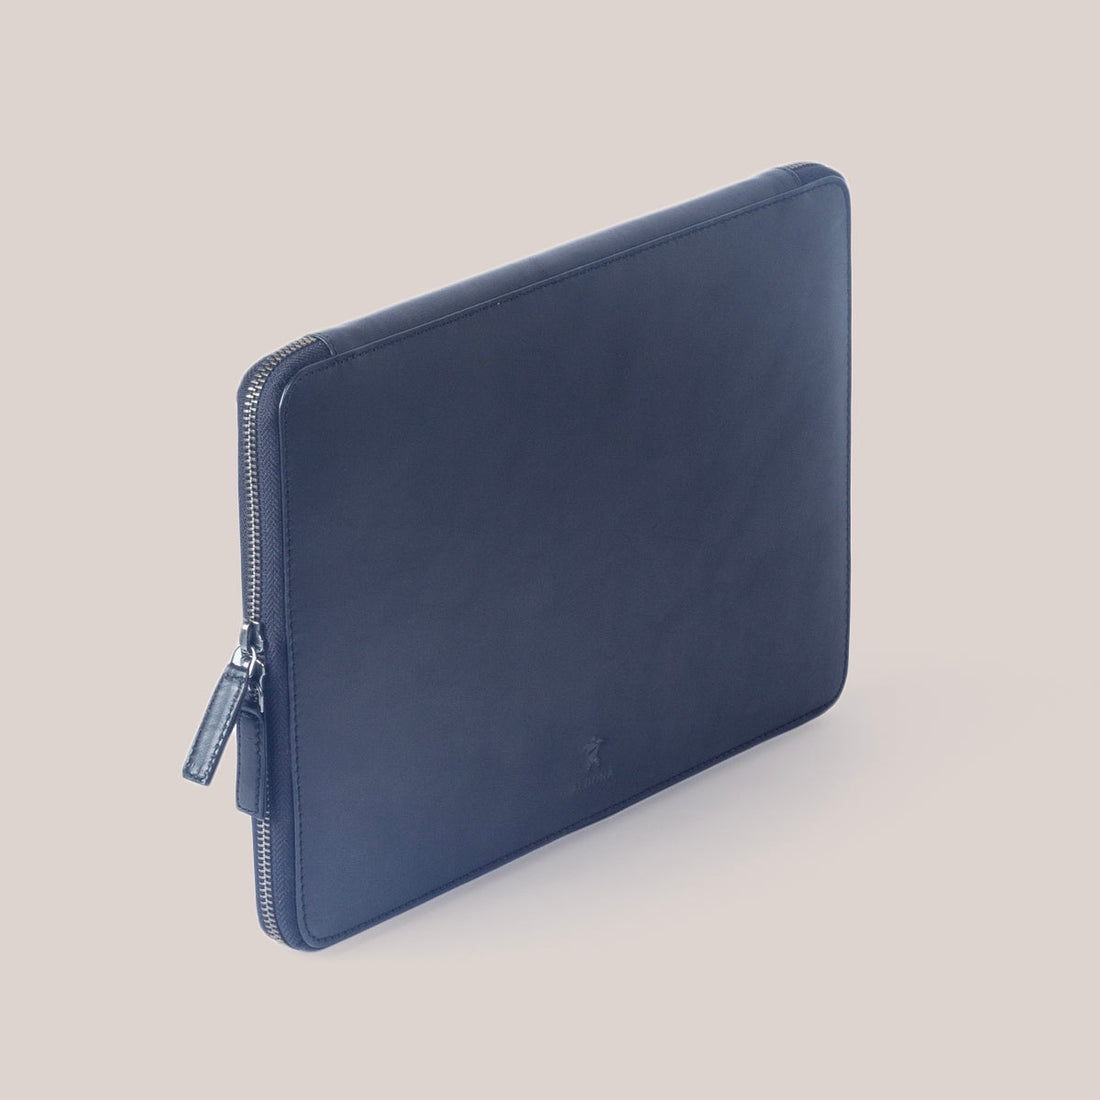 MacBook Pro 14 Zippered Laptop Case - Cognac